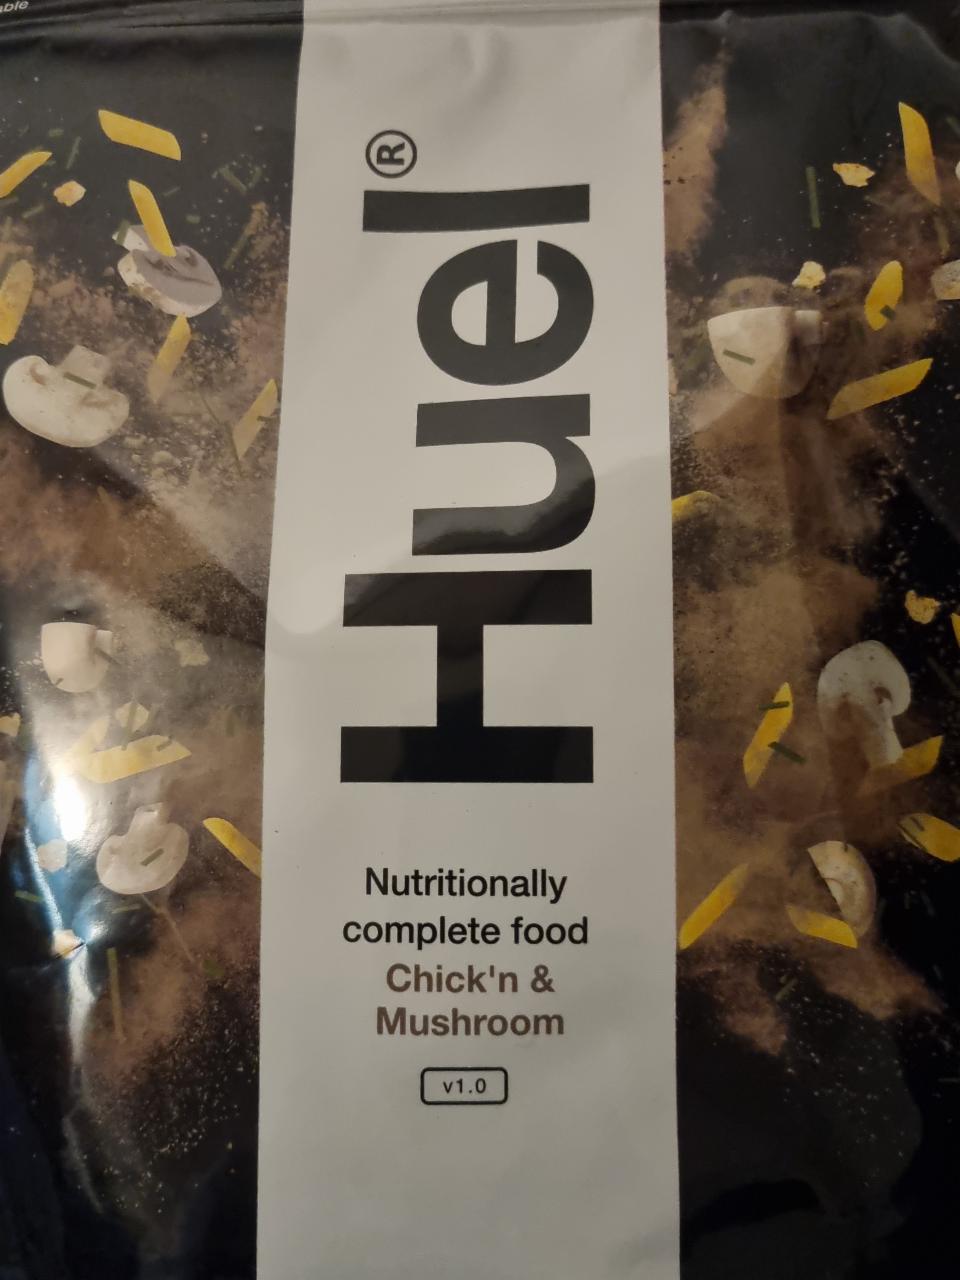 Fotografie - Nutritionally complete food Chick'n & Mushroom v1.0 Huel